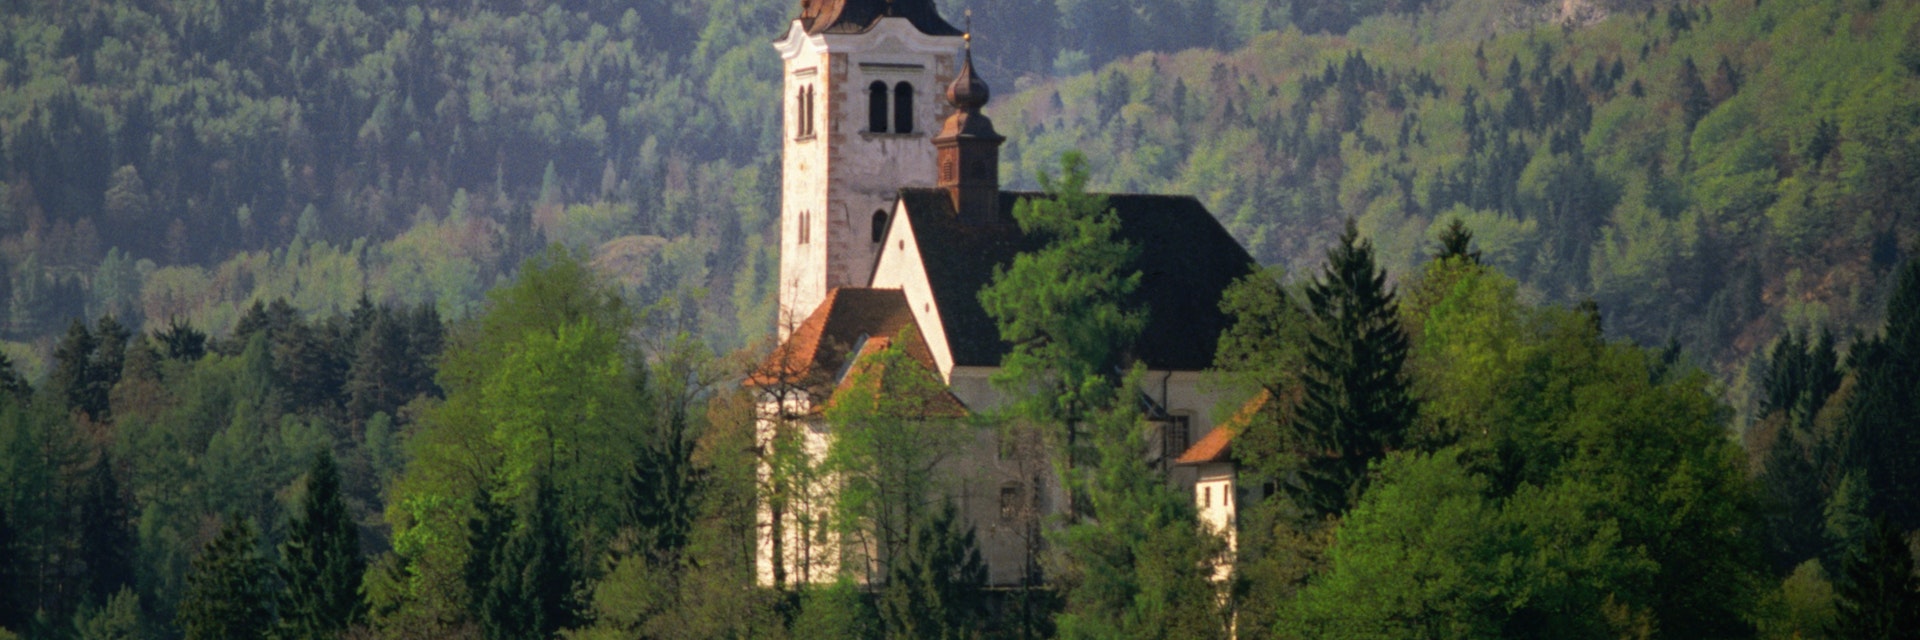 Belfry of baroque Church of the Assumption, Bled Island.